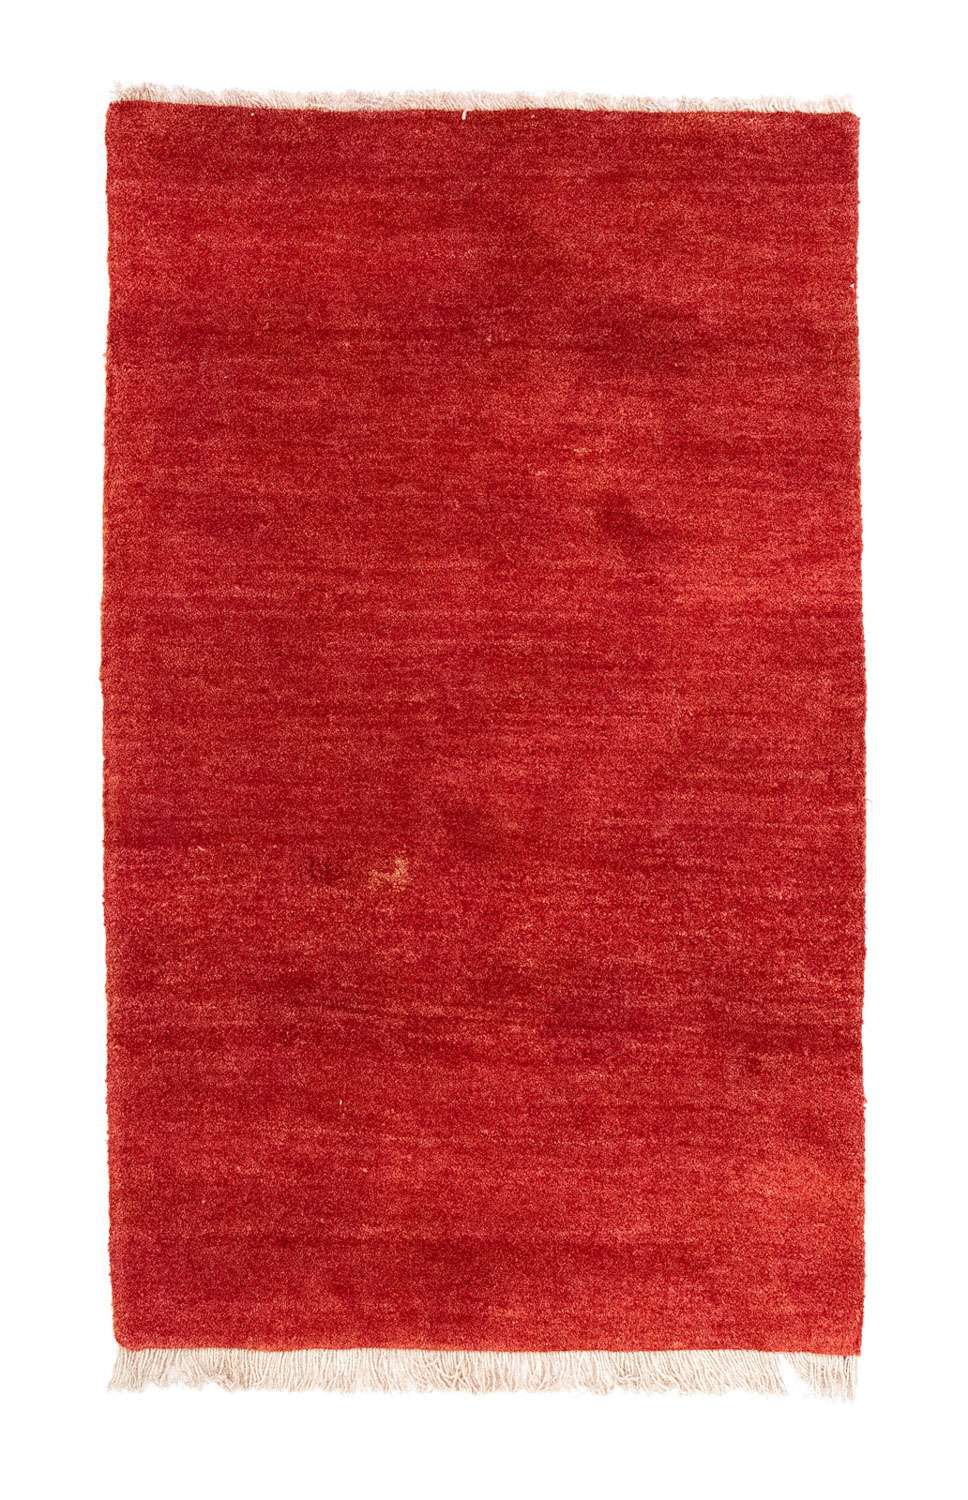 Gabbeh Rug - Perser - 115 x 73 cm - red